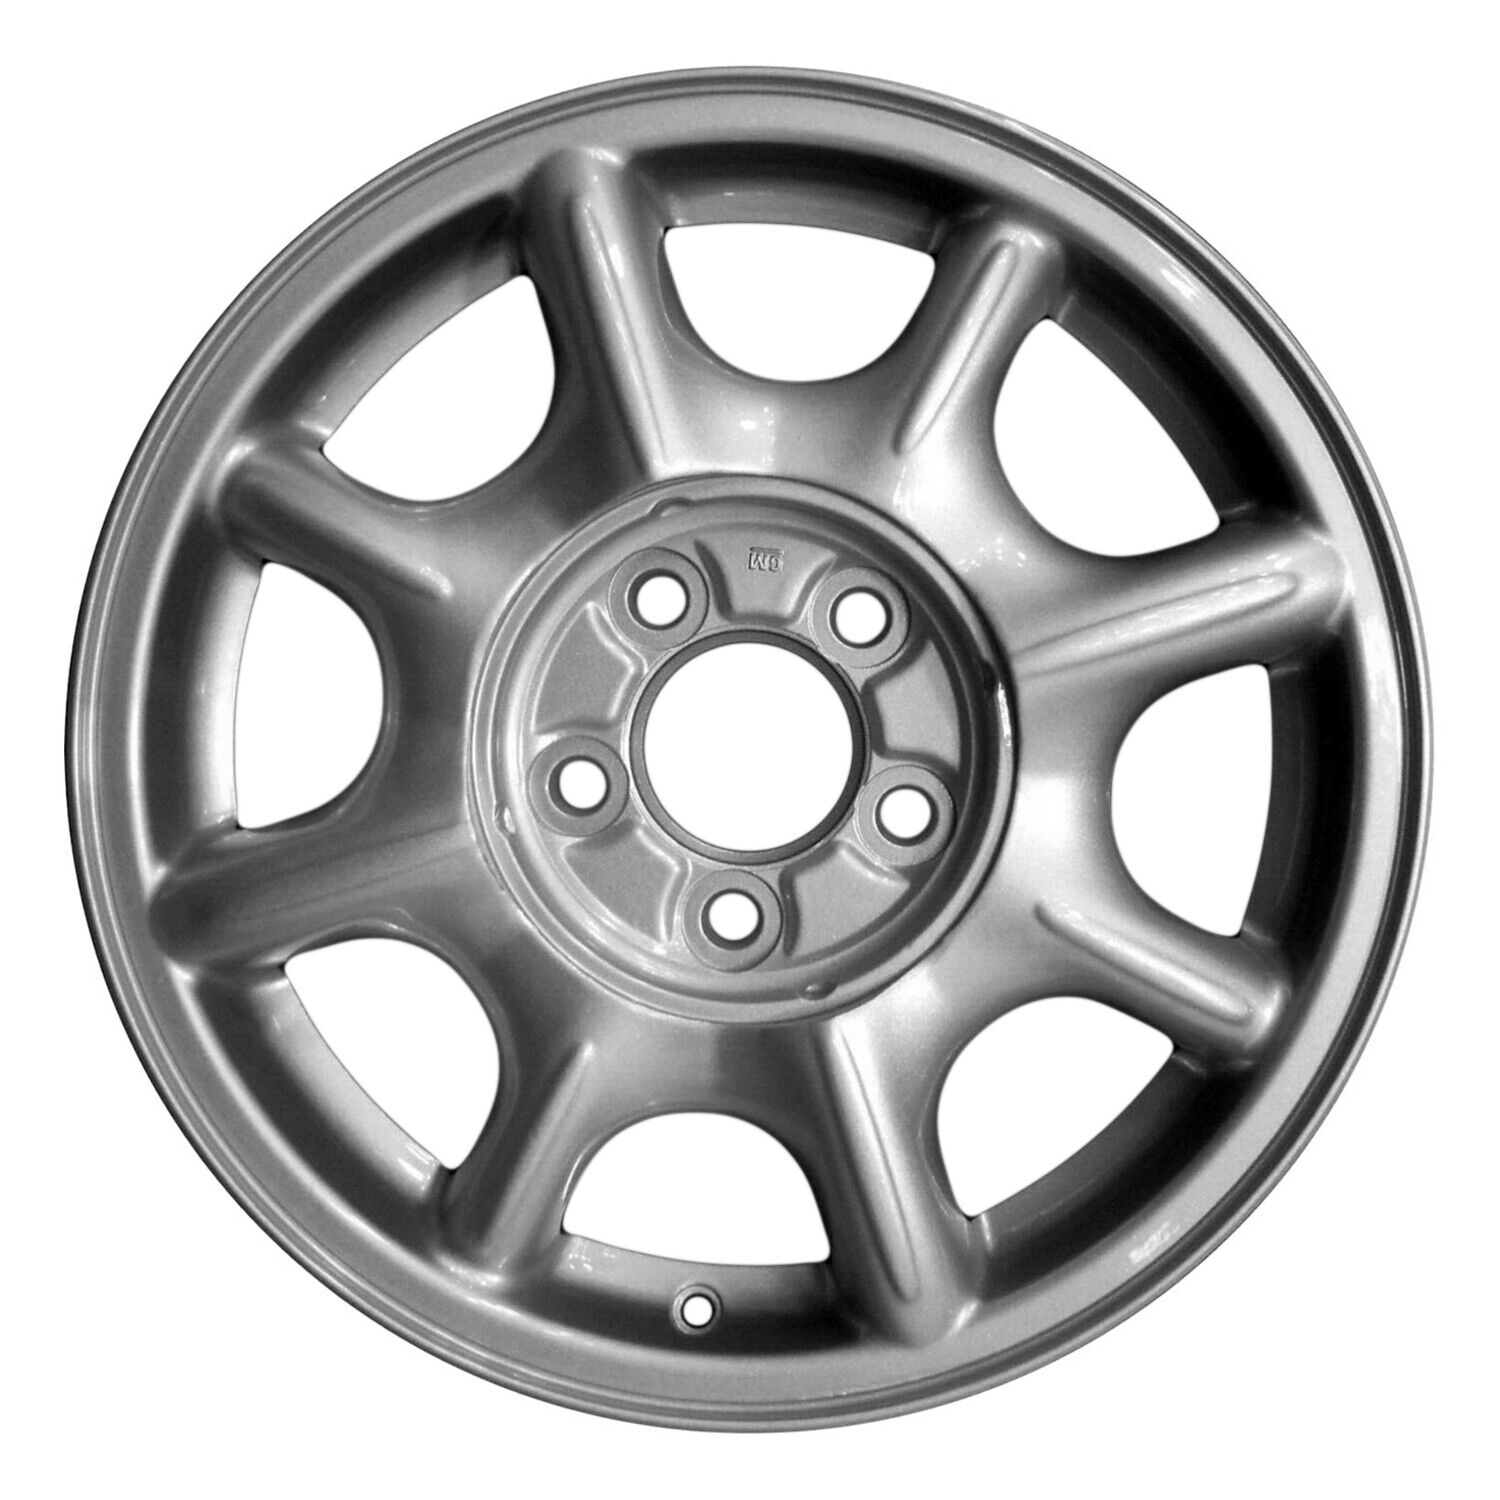 04035 Reconditioned OEM Aluminum Wheel 16x6.5 fits 2000-2003 Buick Park Avenue